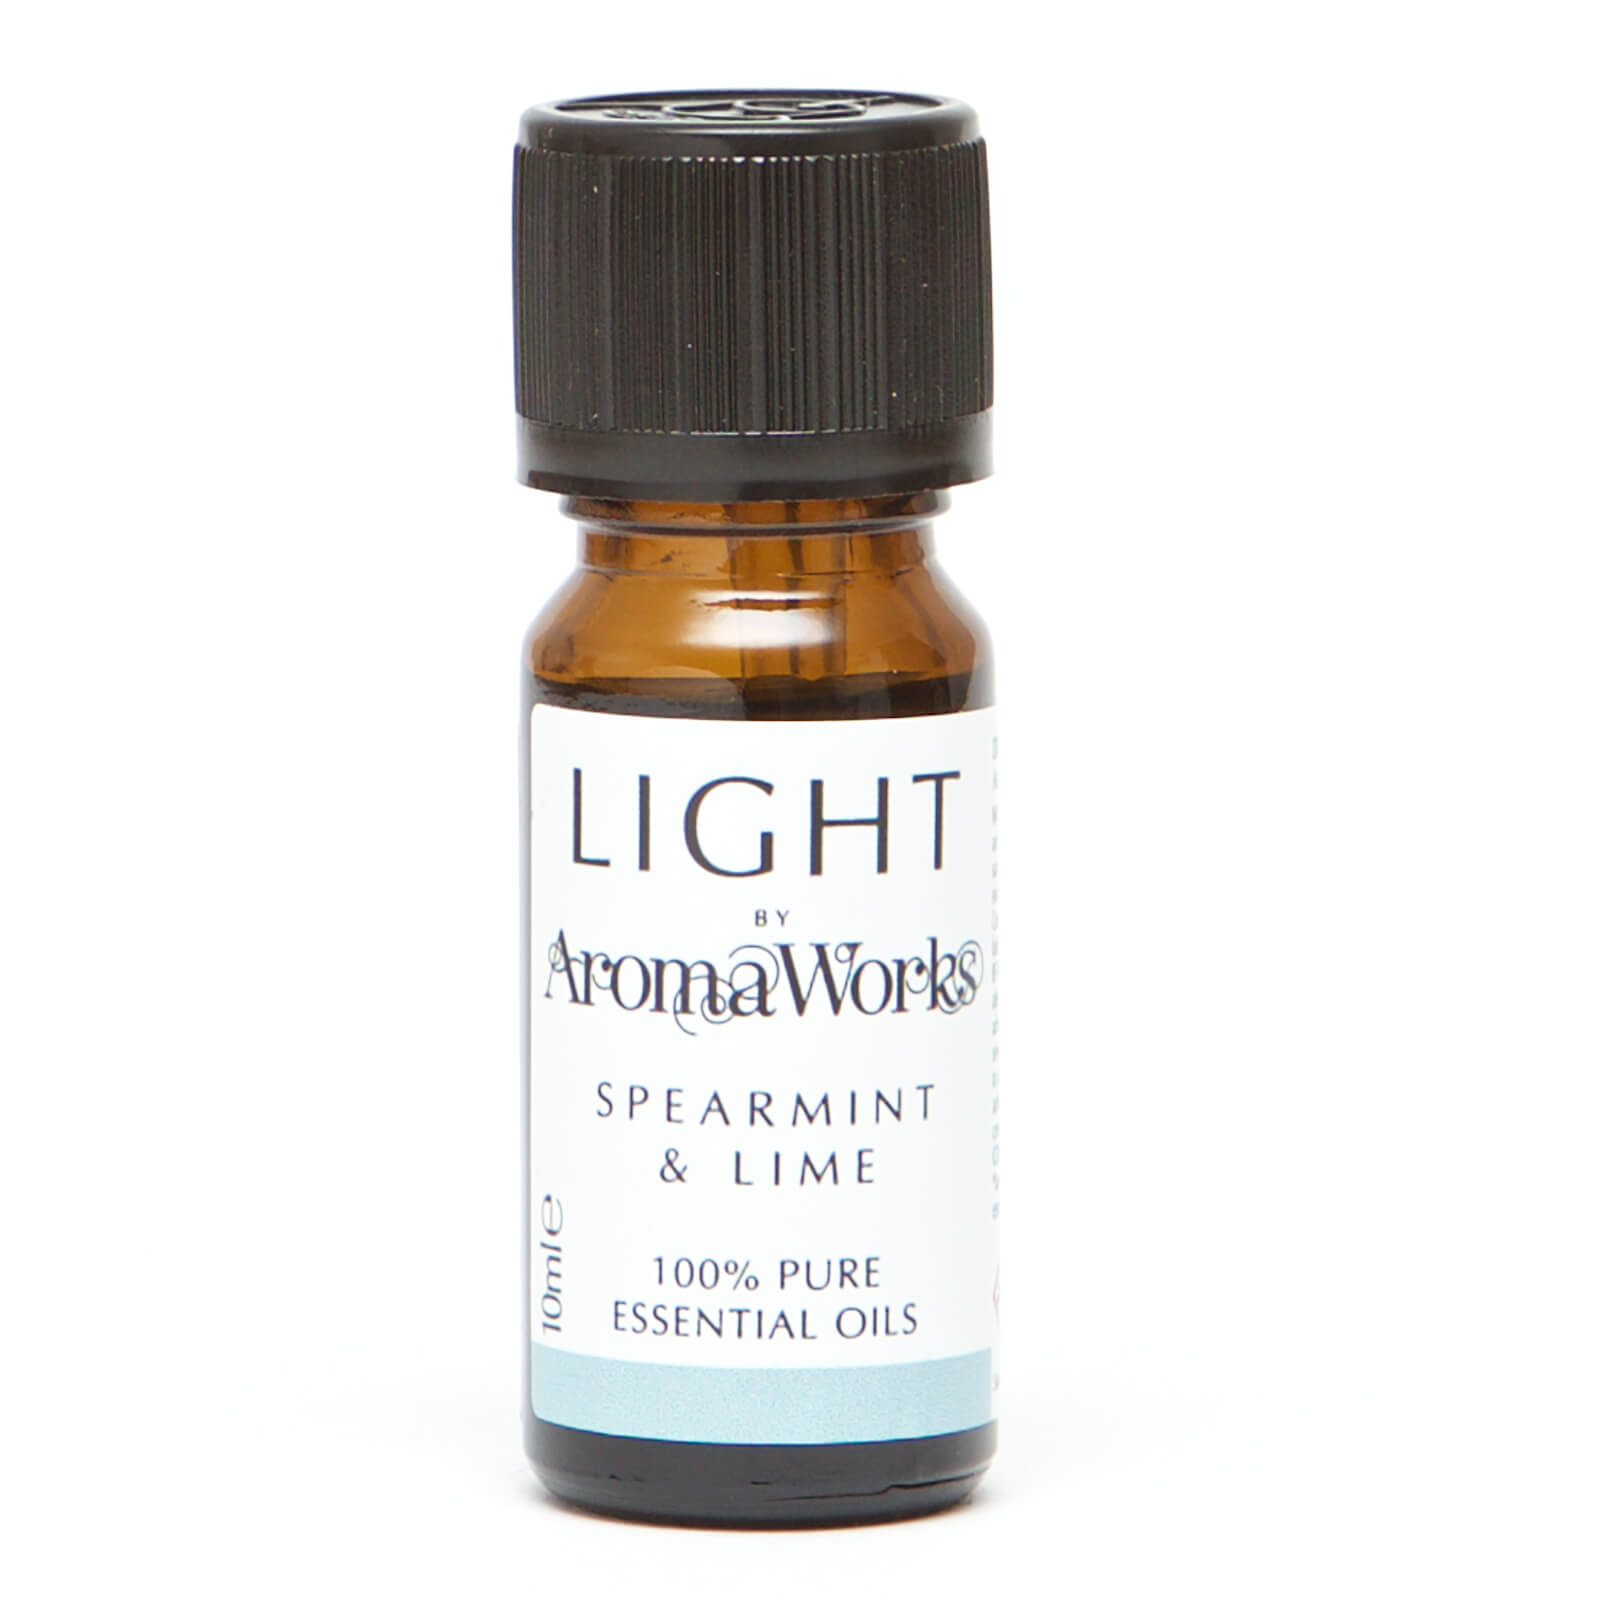 AromaWorks Light Range - Spearmint and Lime 10ml Essential Oil